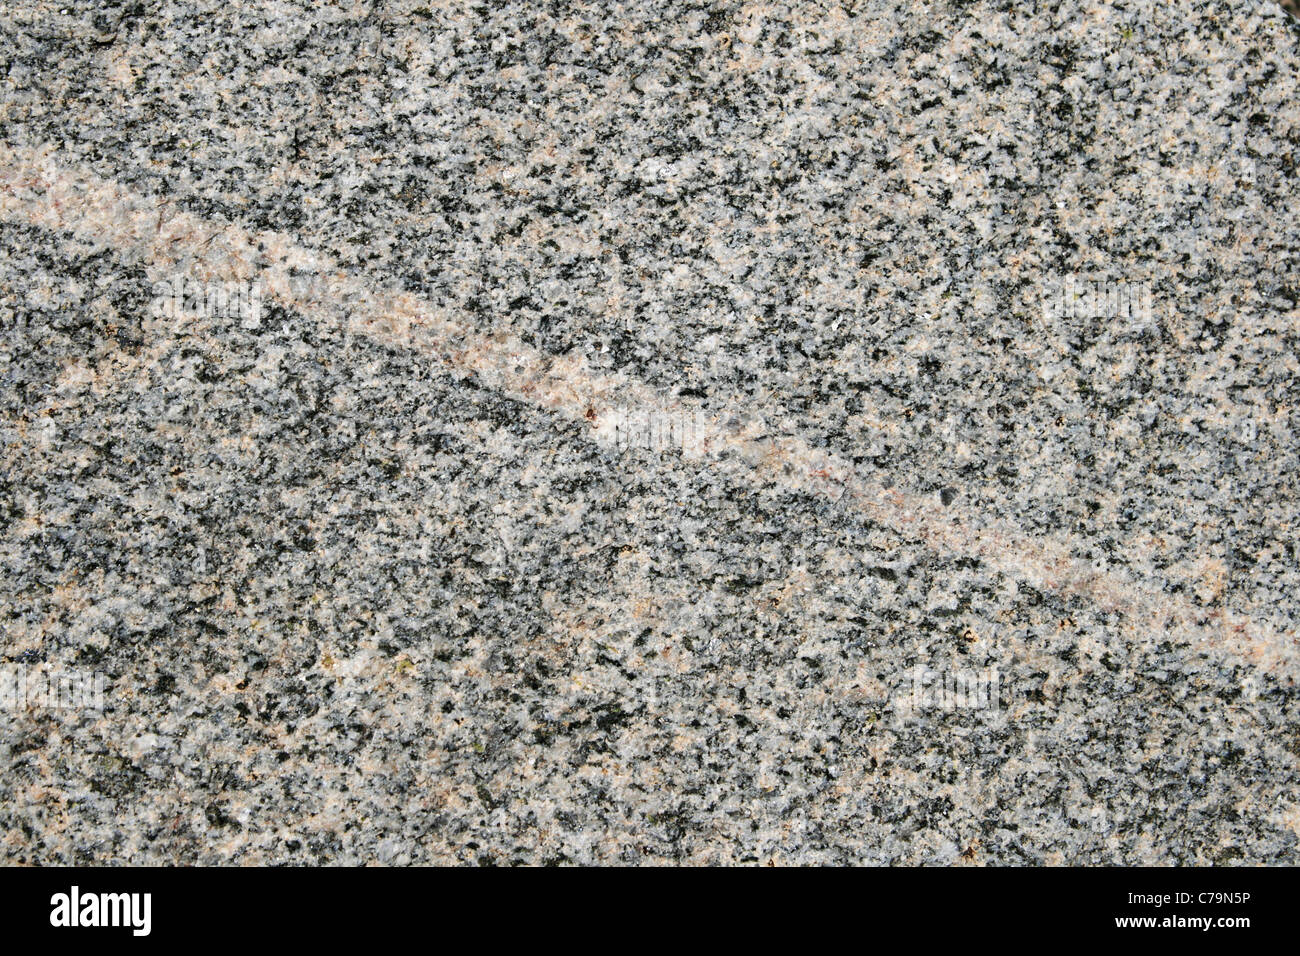 granite rock background with white vein Stock Photo